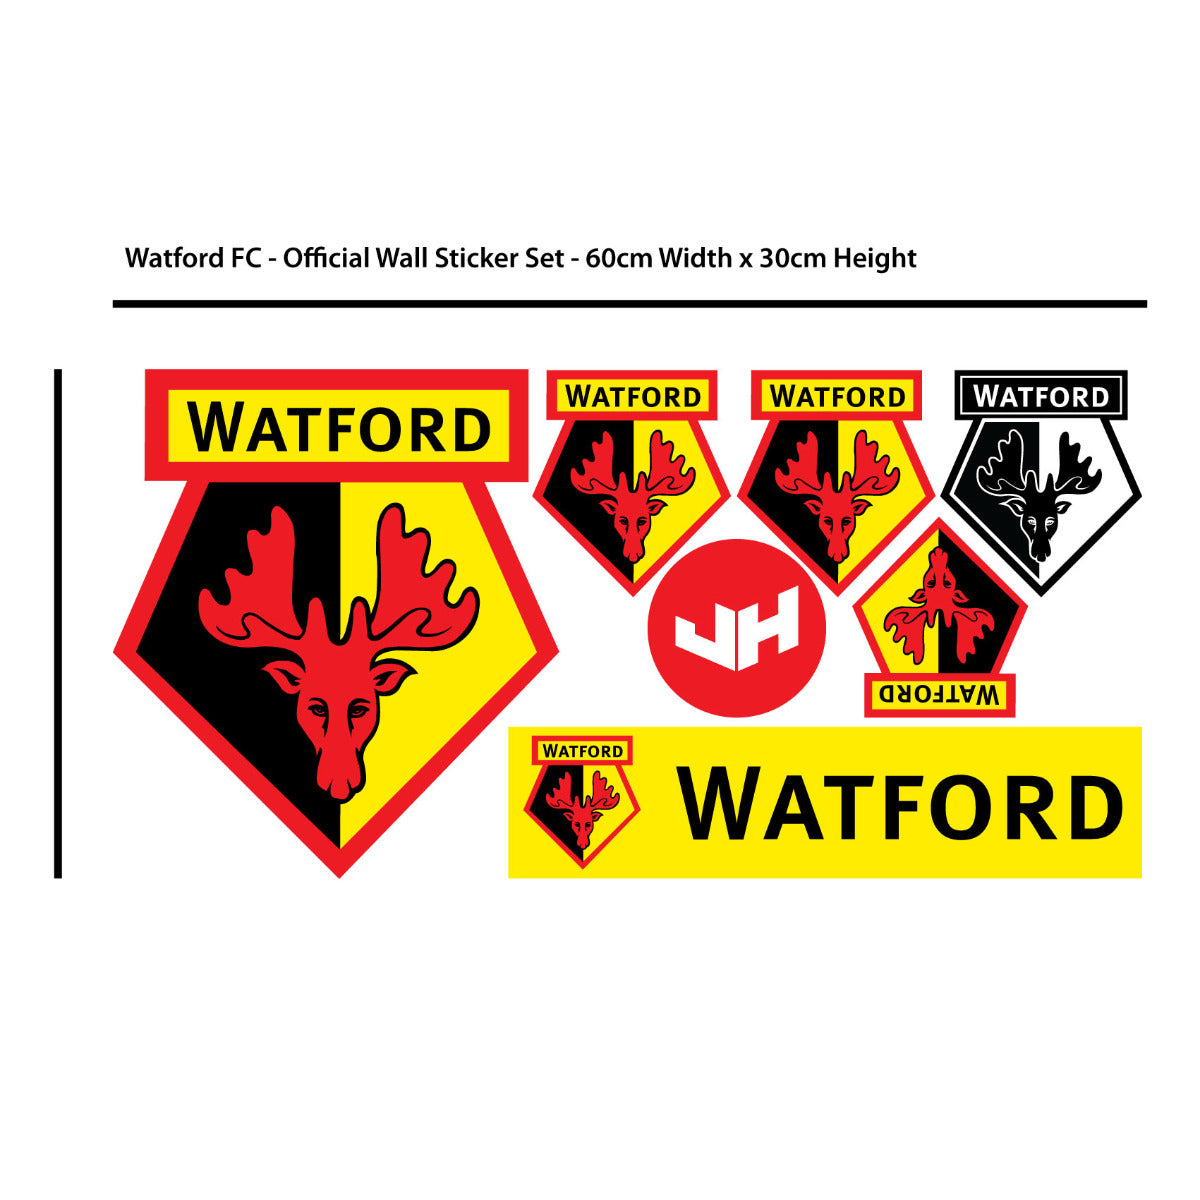 Watford FC -  Vicarage Road Stadium Crowd Wall Sticker